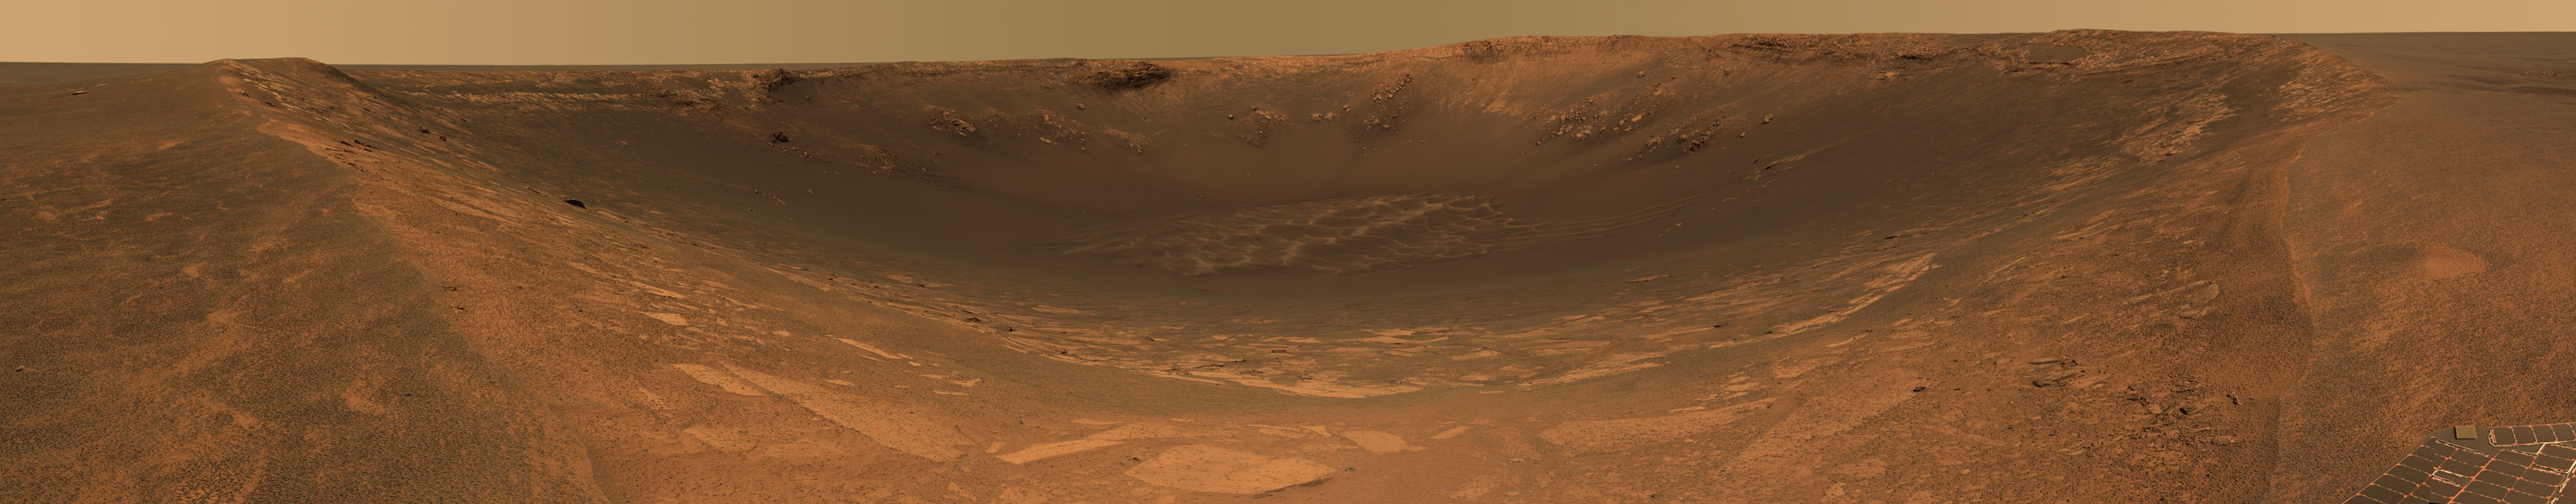 Perseverance NASA 4" PATCH vtg MARS Rover Opportunity MERIDIANI PLANUM 